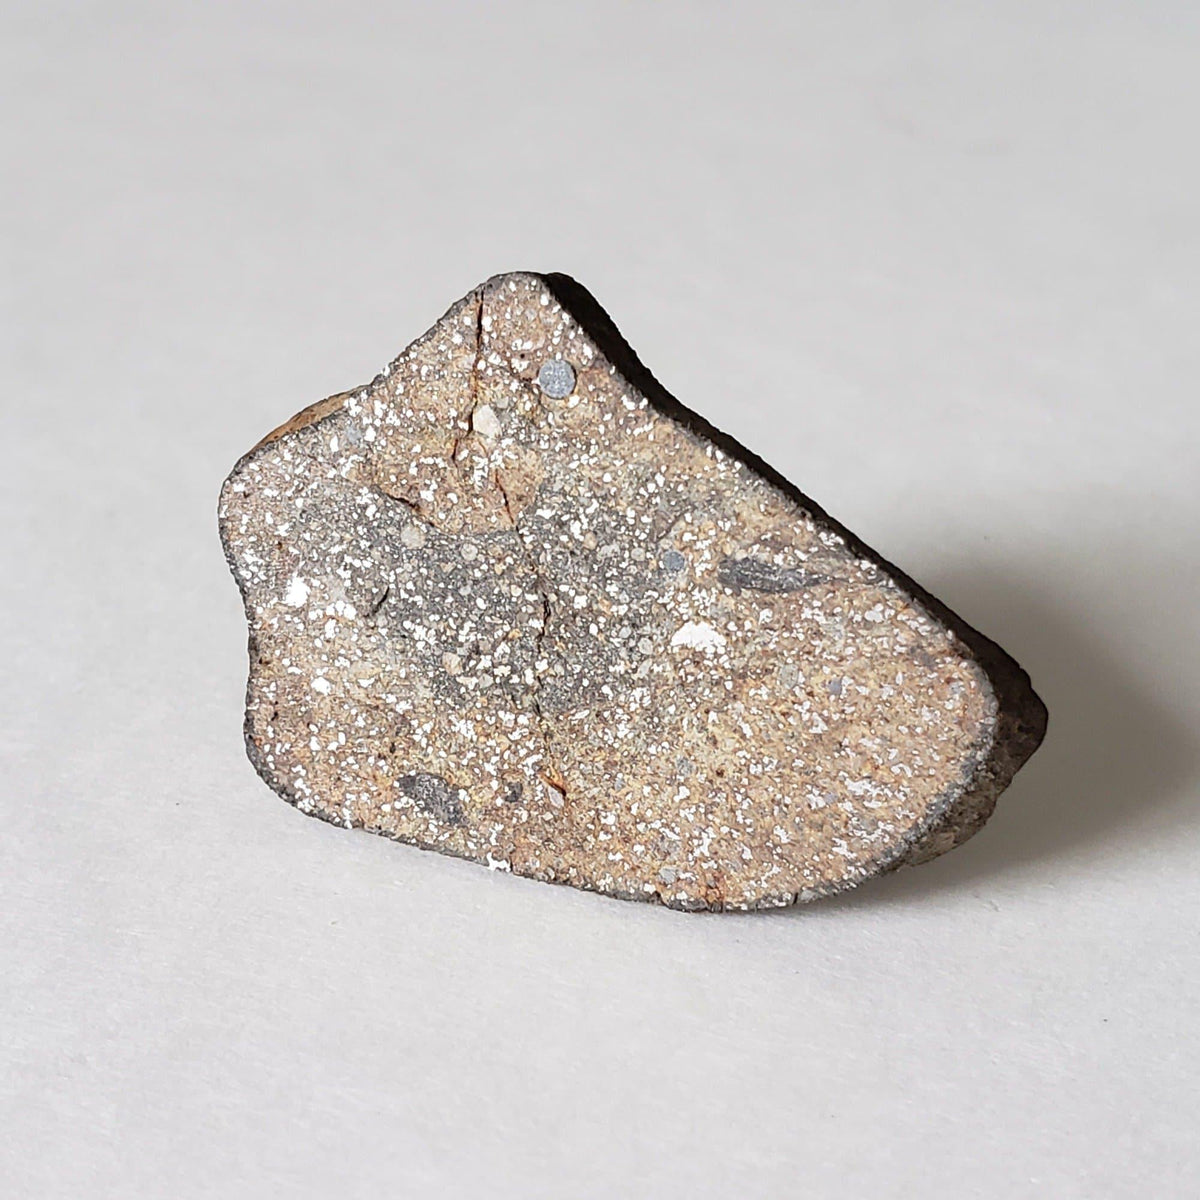 Gao-Guenie Meteorite | 7.76 grams | Slice | H5 Chondrite | Observed Fall | Burkina Faso